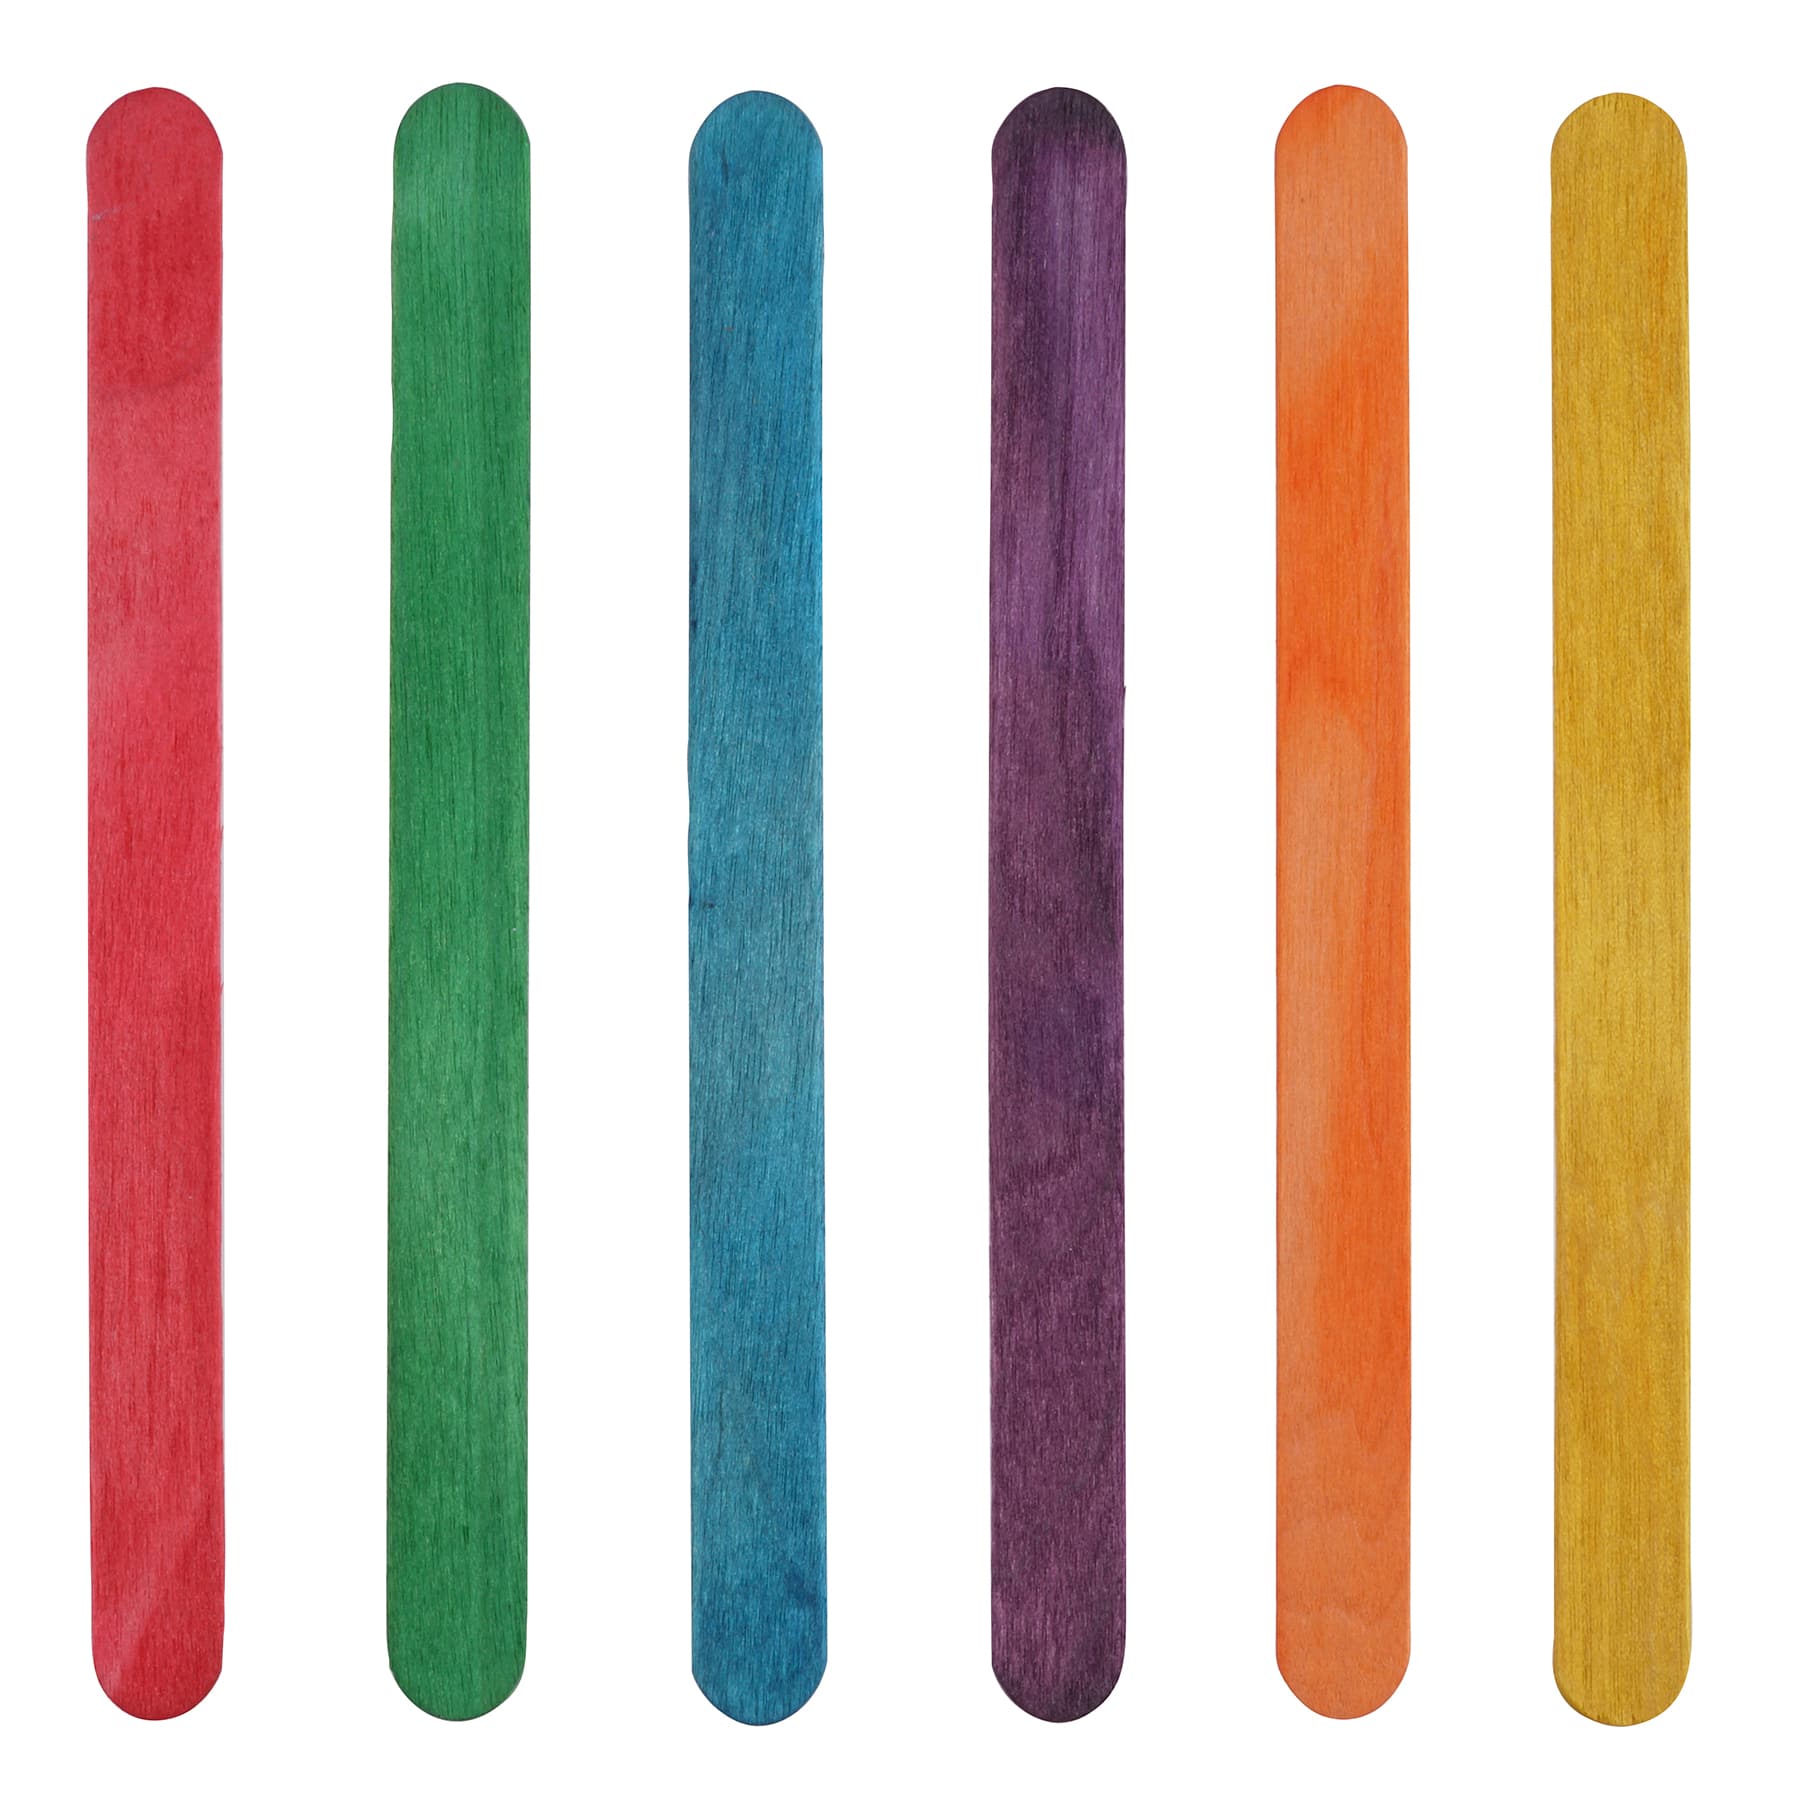 1000 Pack Wood Craft Popsicle Sticks Green Color 4.5 inch, CraftySticks